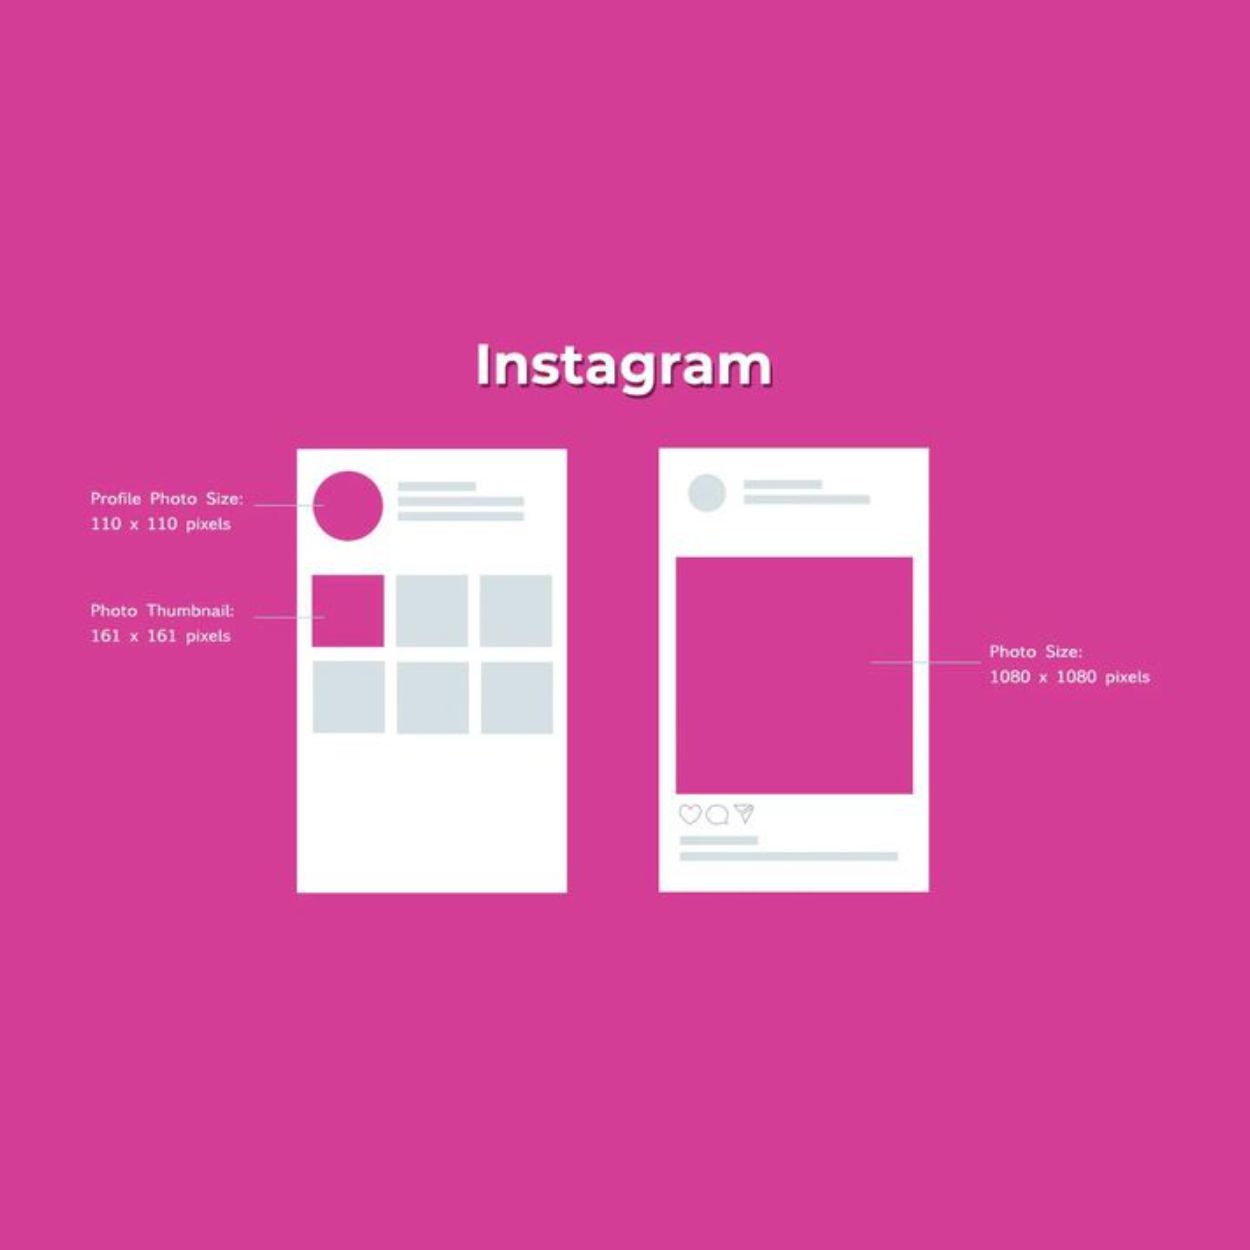 Mεγέθη εικόνων για το Instagram